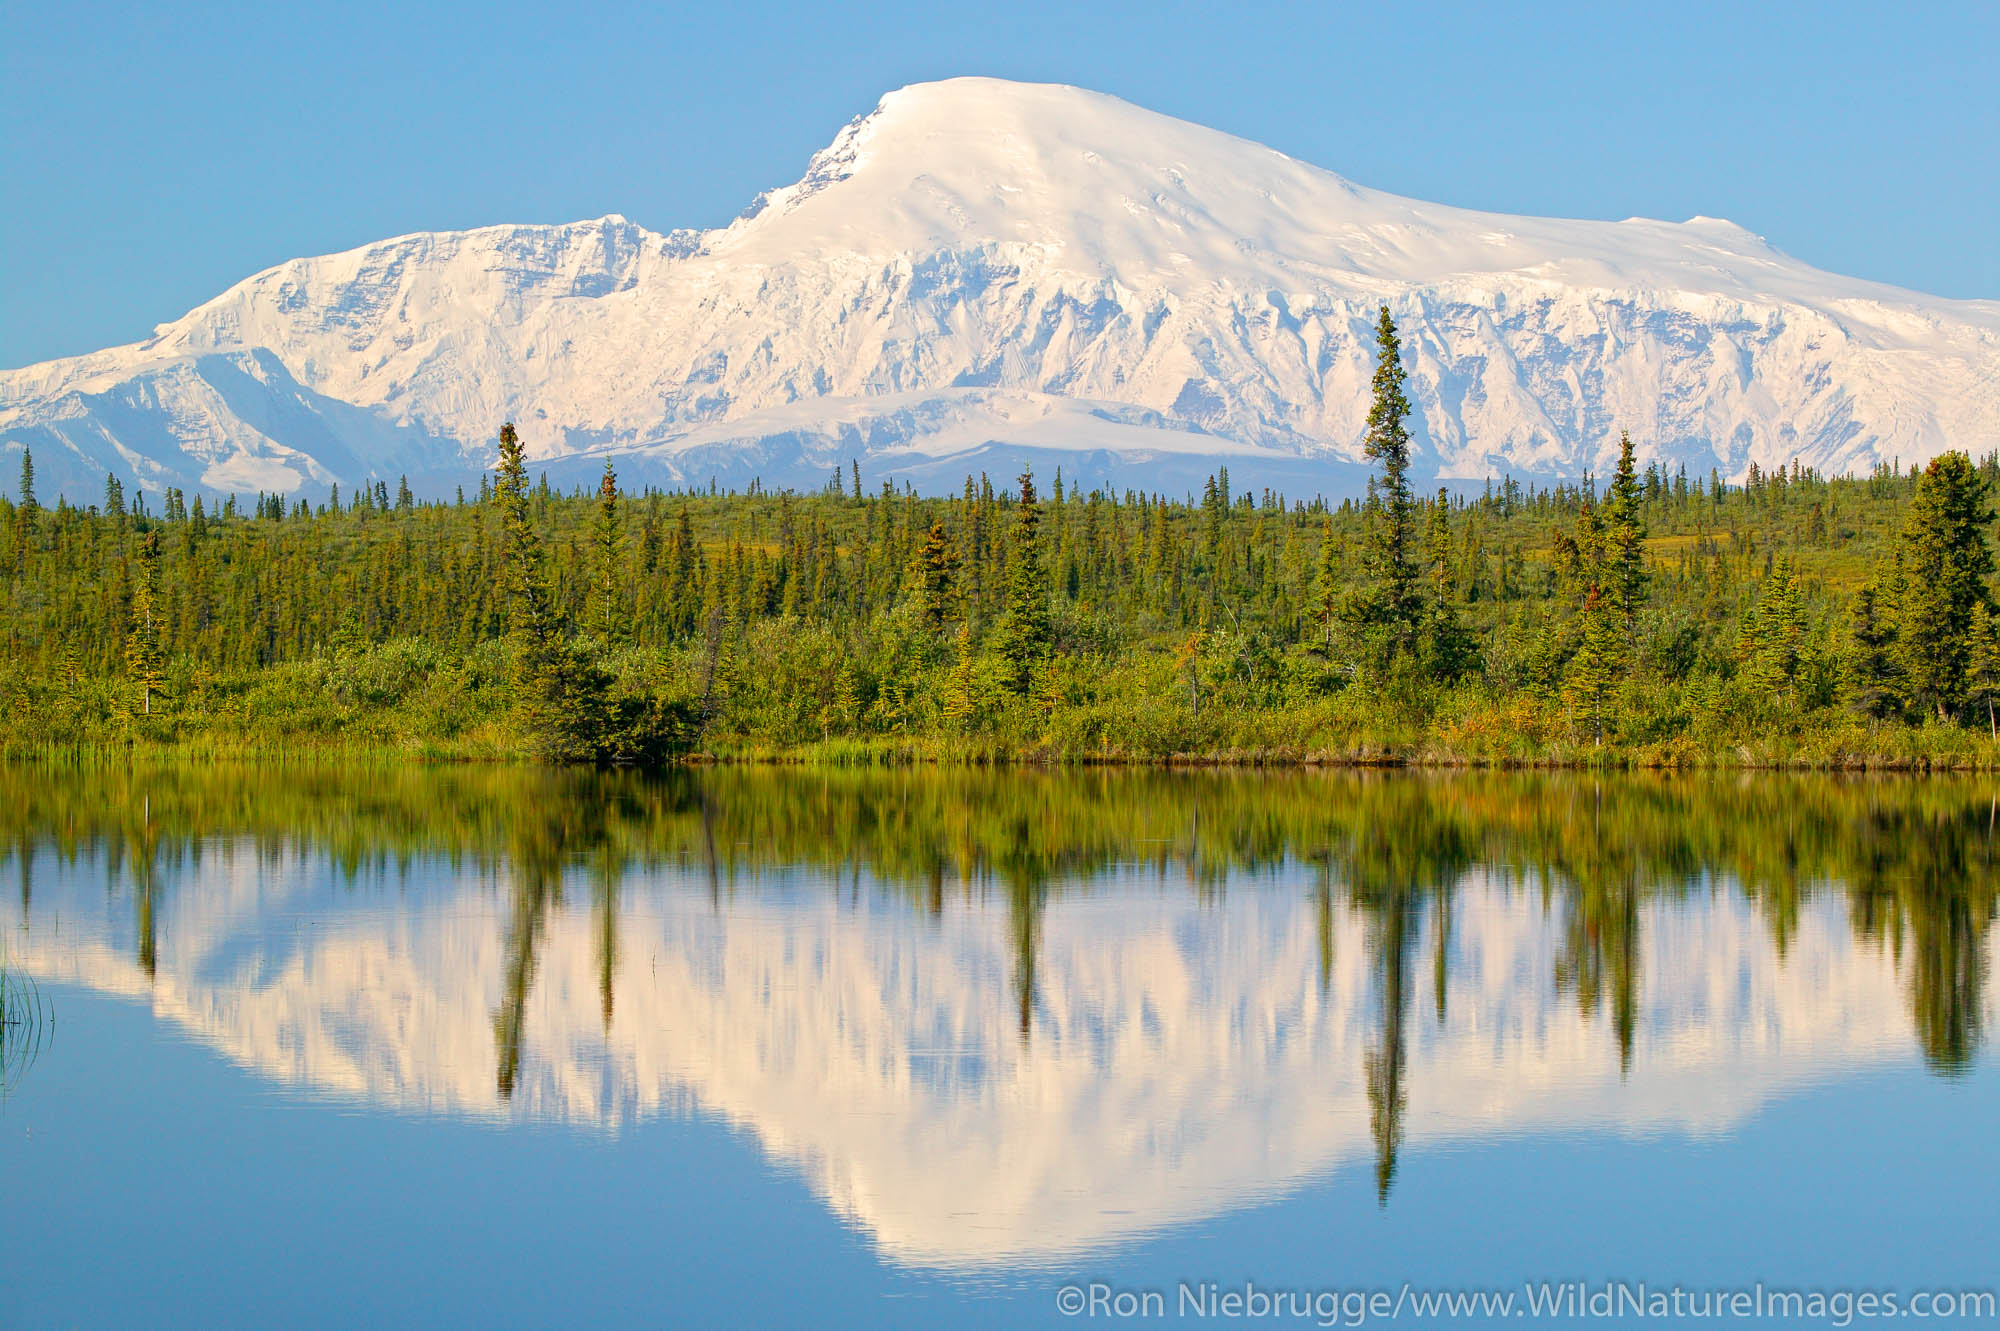 Mt. Sanford (16,237 feet) from Rock Lake along the Nabesna Road, Wrangell-St Elias National Park, Alaska.